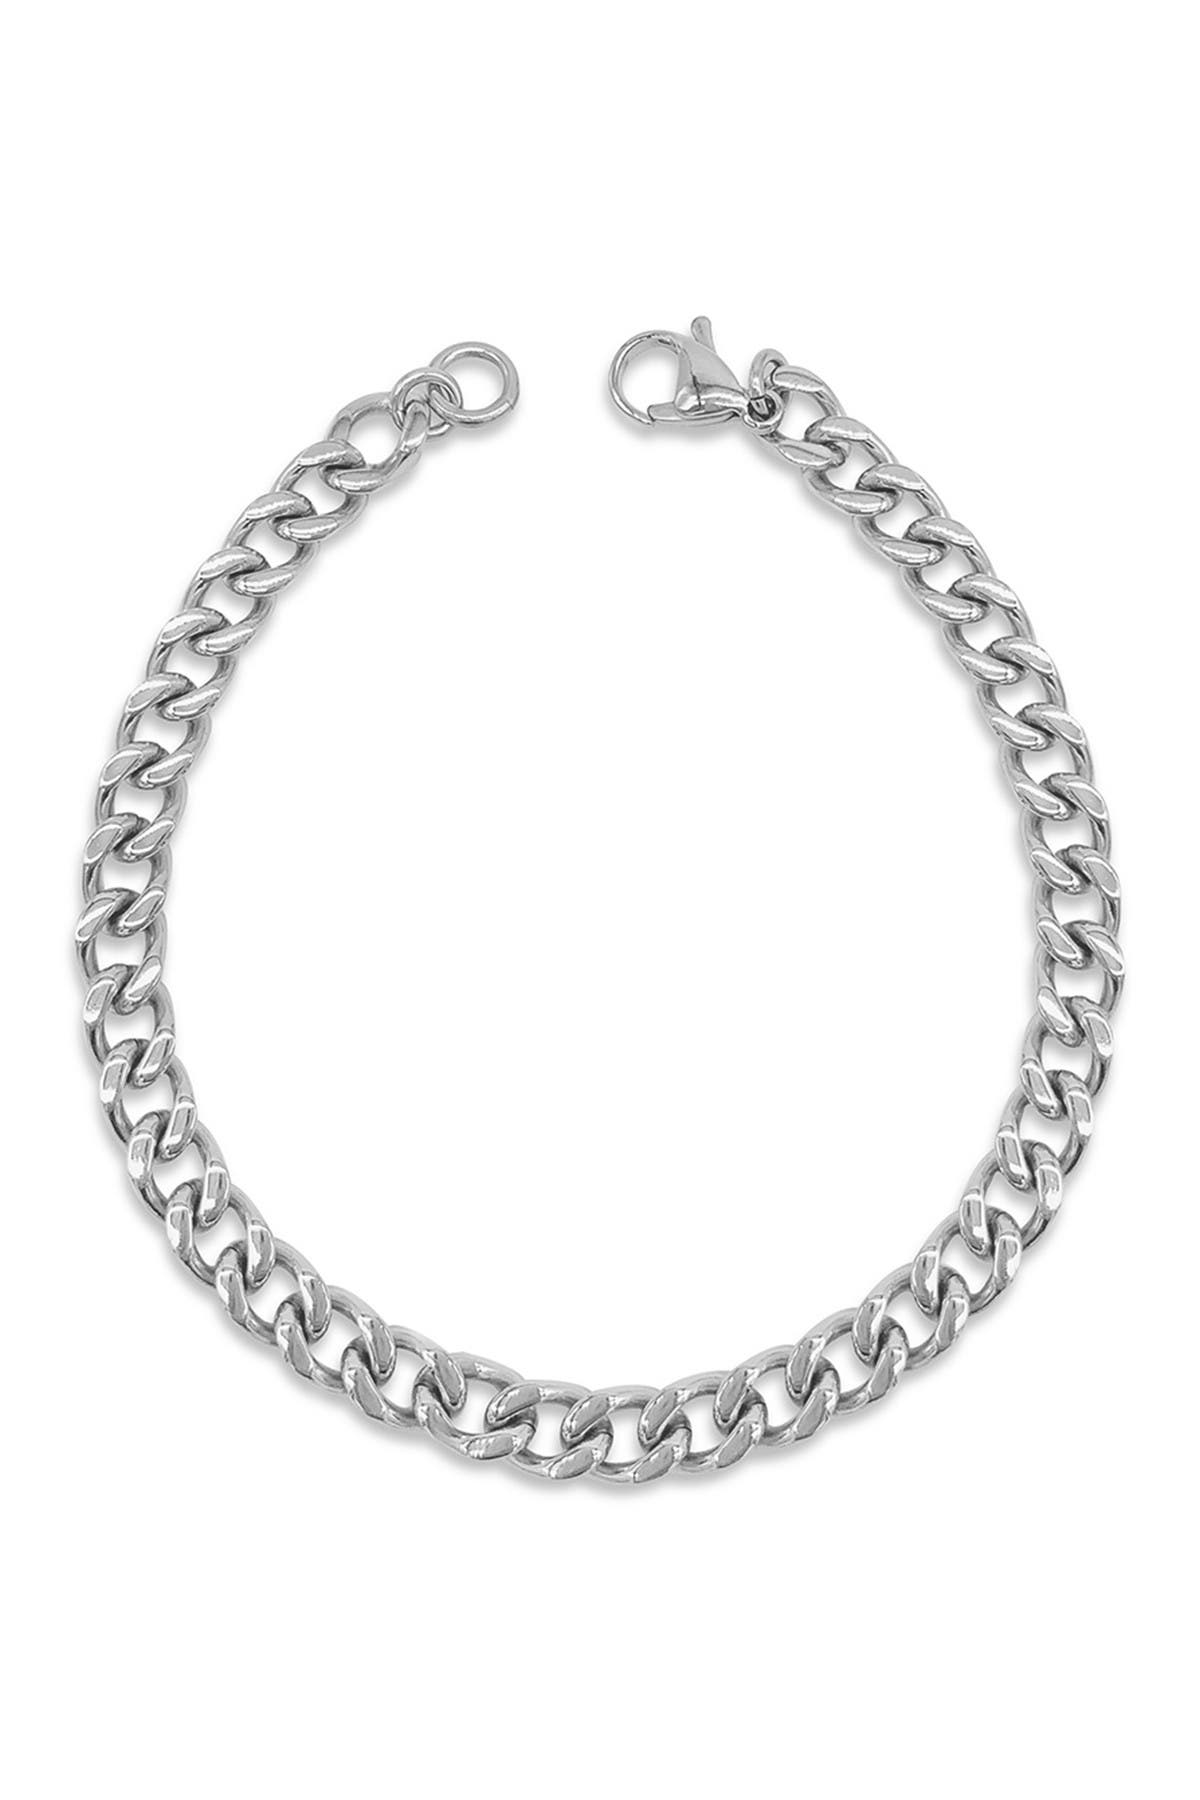 Adornia 7mm Cuban Chain Bracelet In Silver